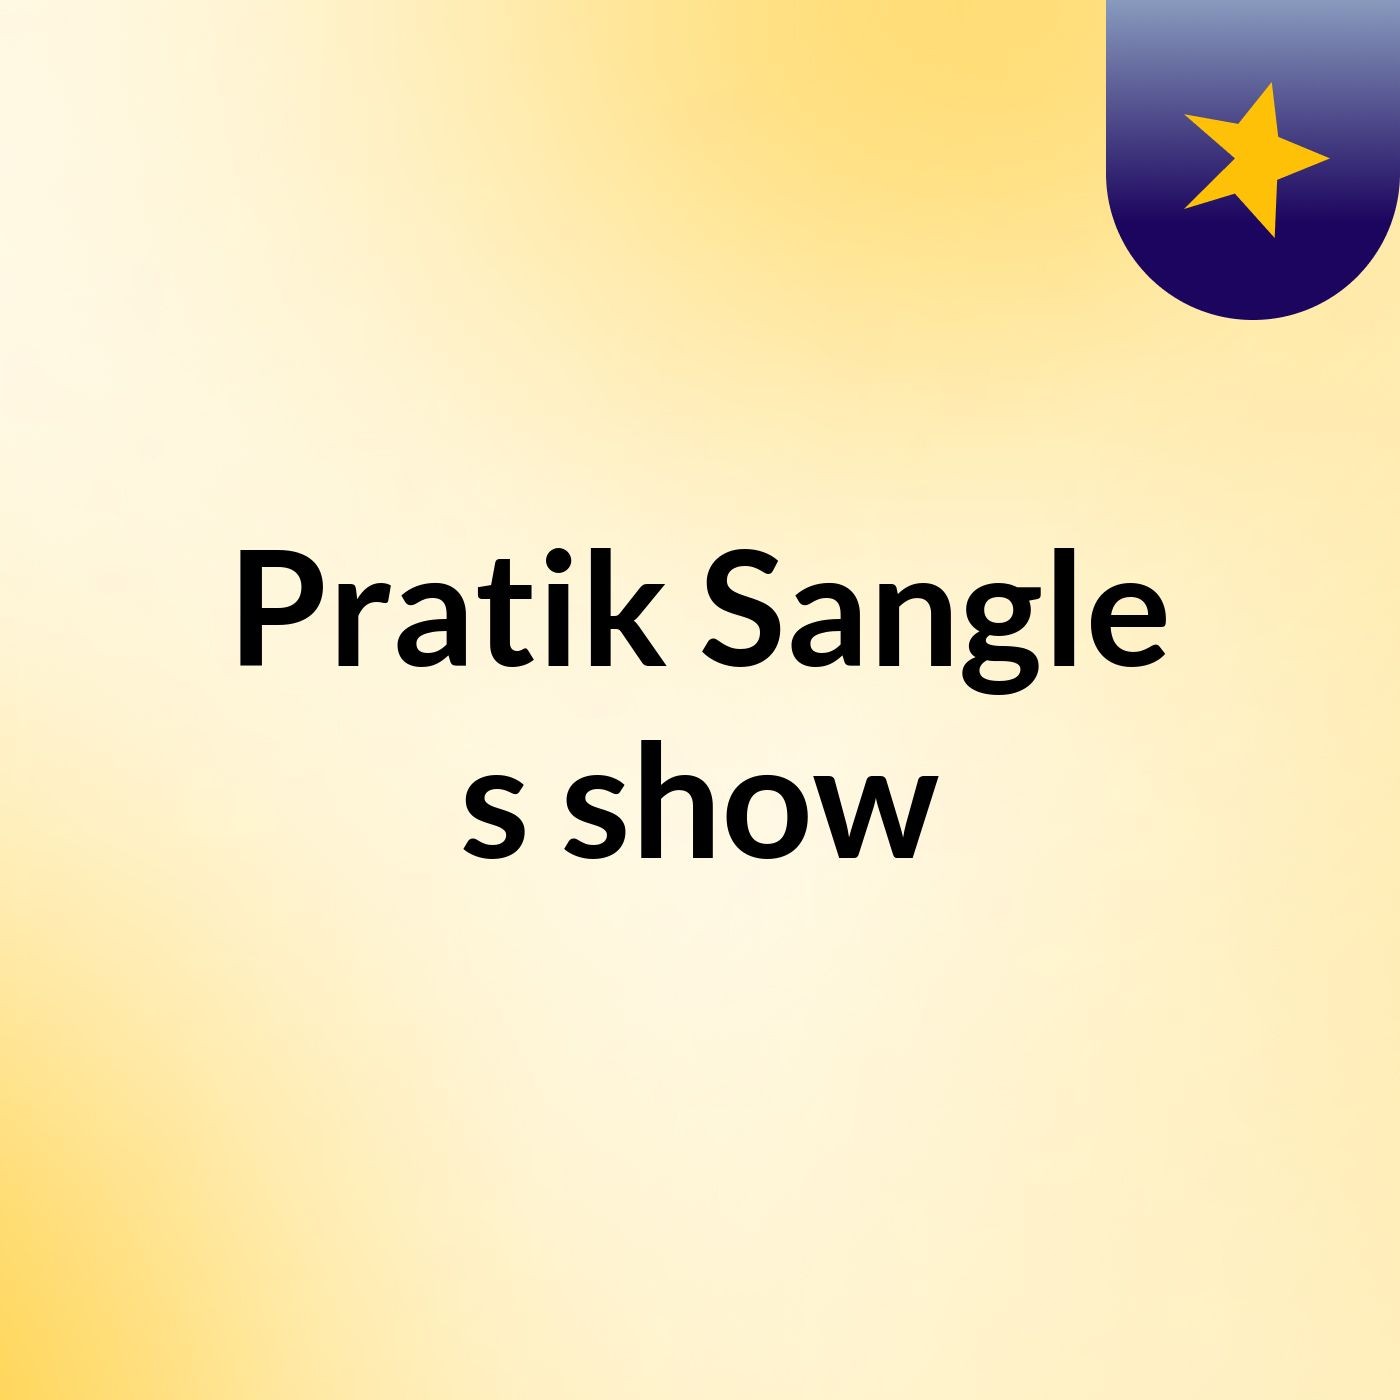 Episode 2 - Pratik Sangle's show